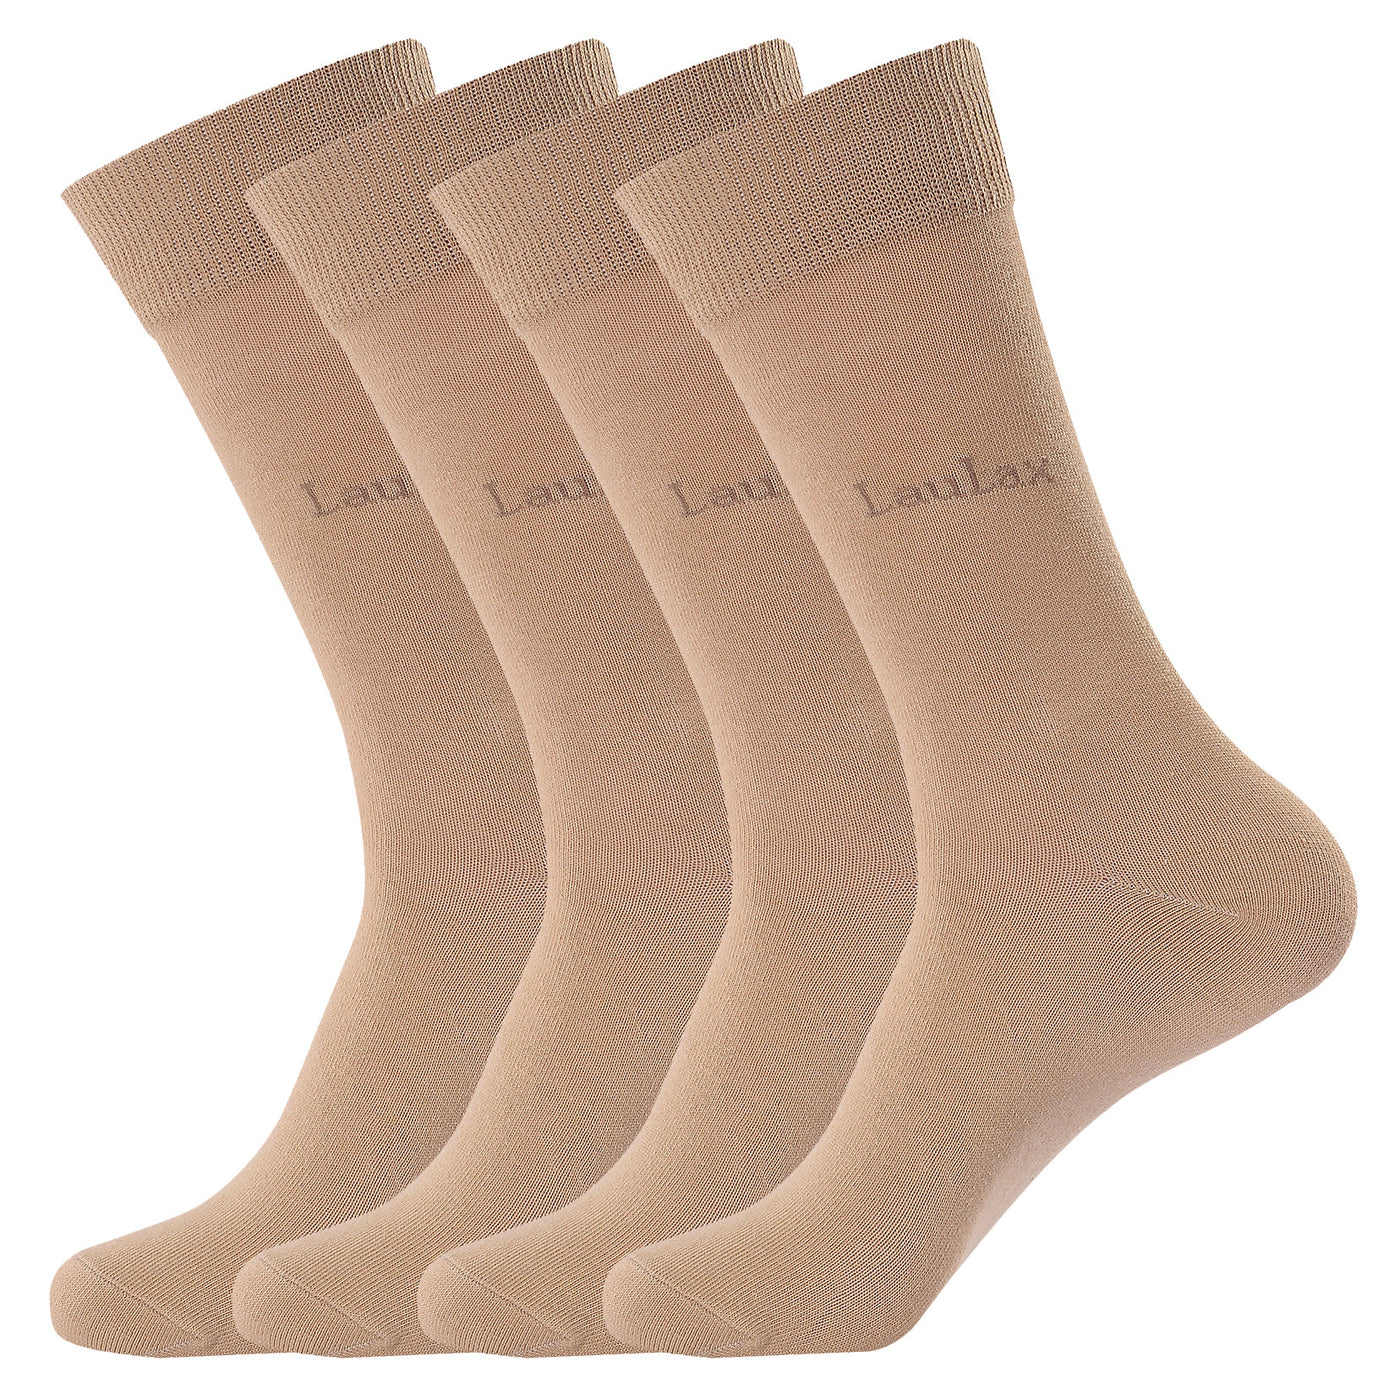 Laulax 4 Pairs Finest men’s Combed Cotton Suit Socks in Beige